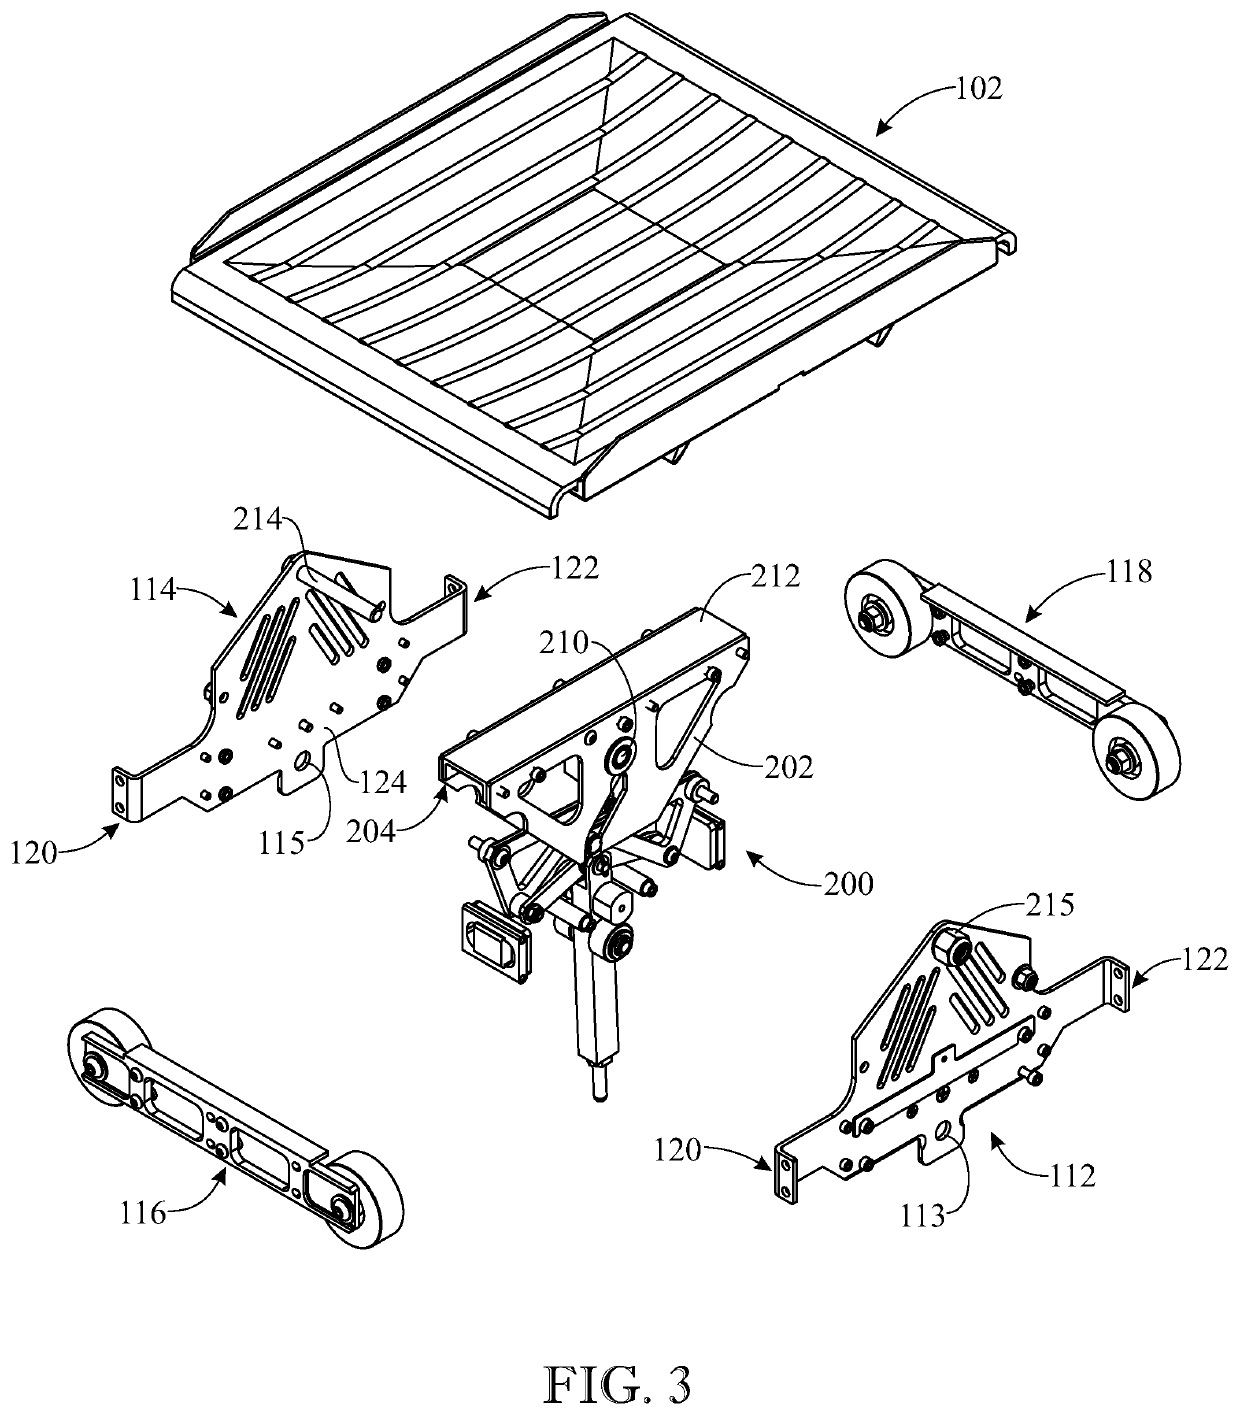 Tilt tray mechanism